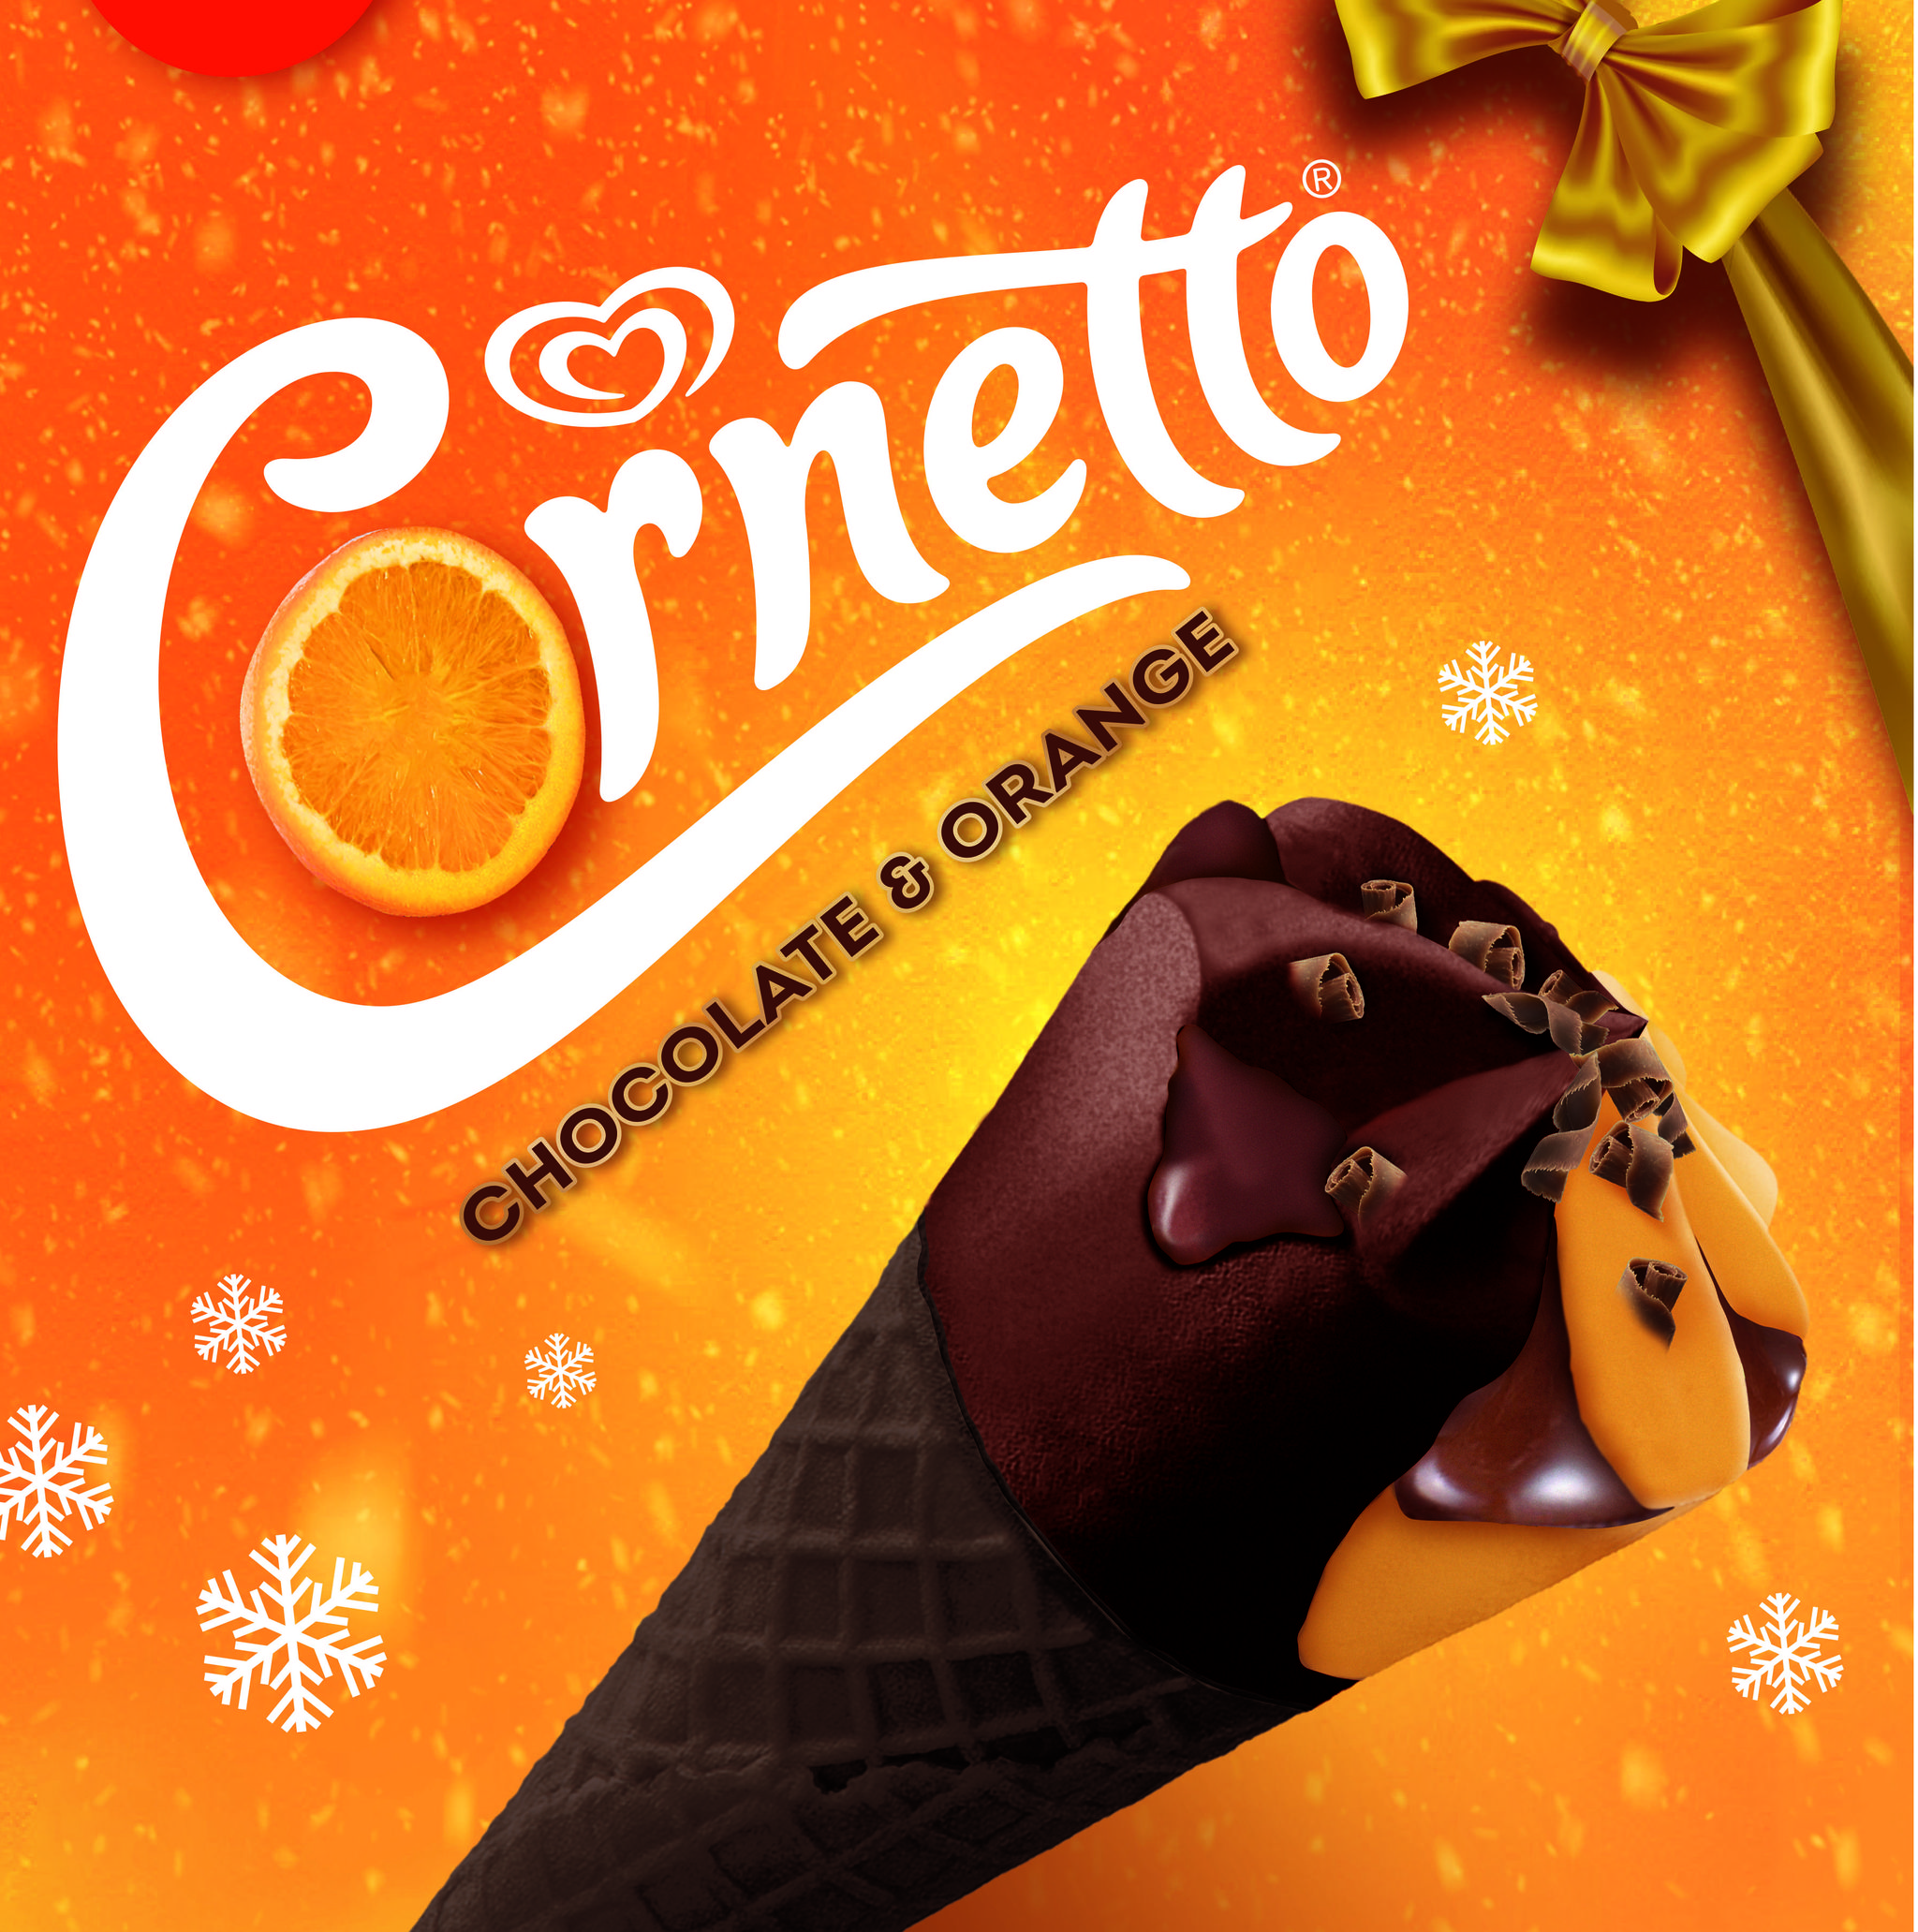 chocolate and orange cornetto